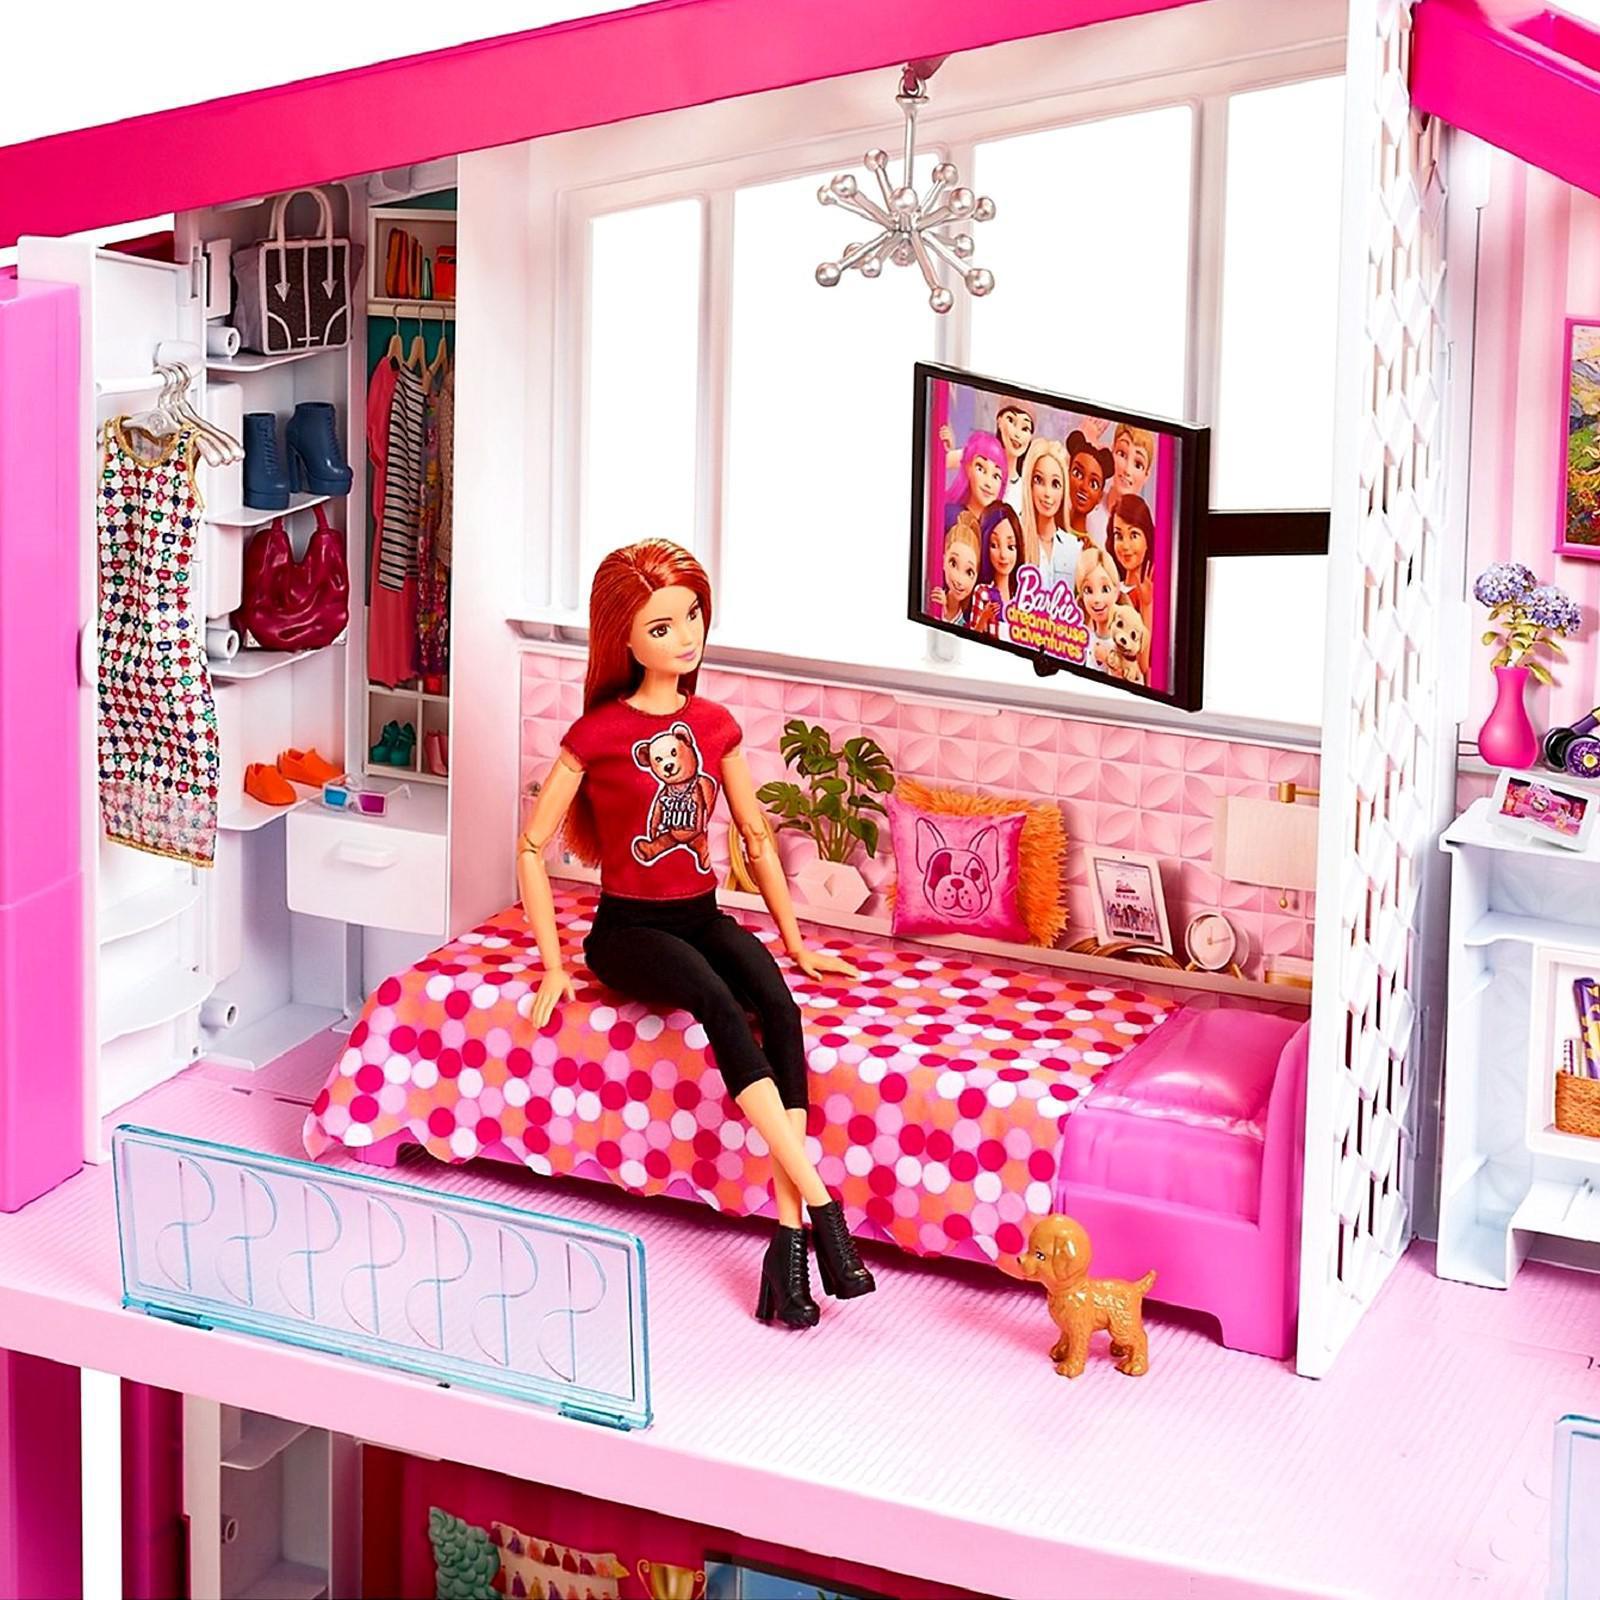 Лучший дом барби. Кукла Барби Дрим Хаус. Barbie дом мечты fhy73. Дом Барби Дрим Хаус. Дом для куклы Барби fhy73.